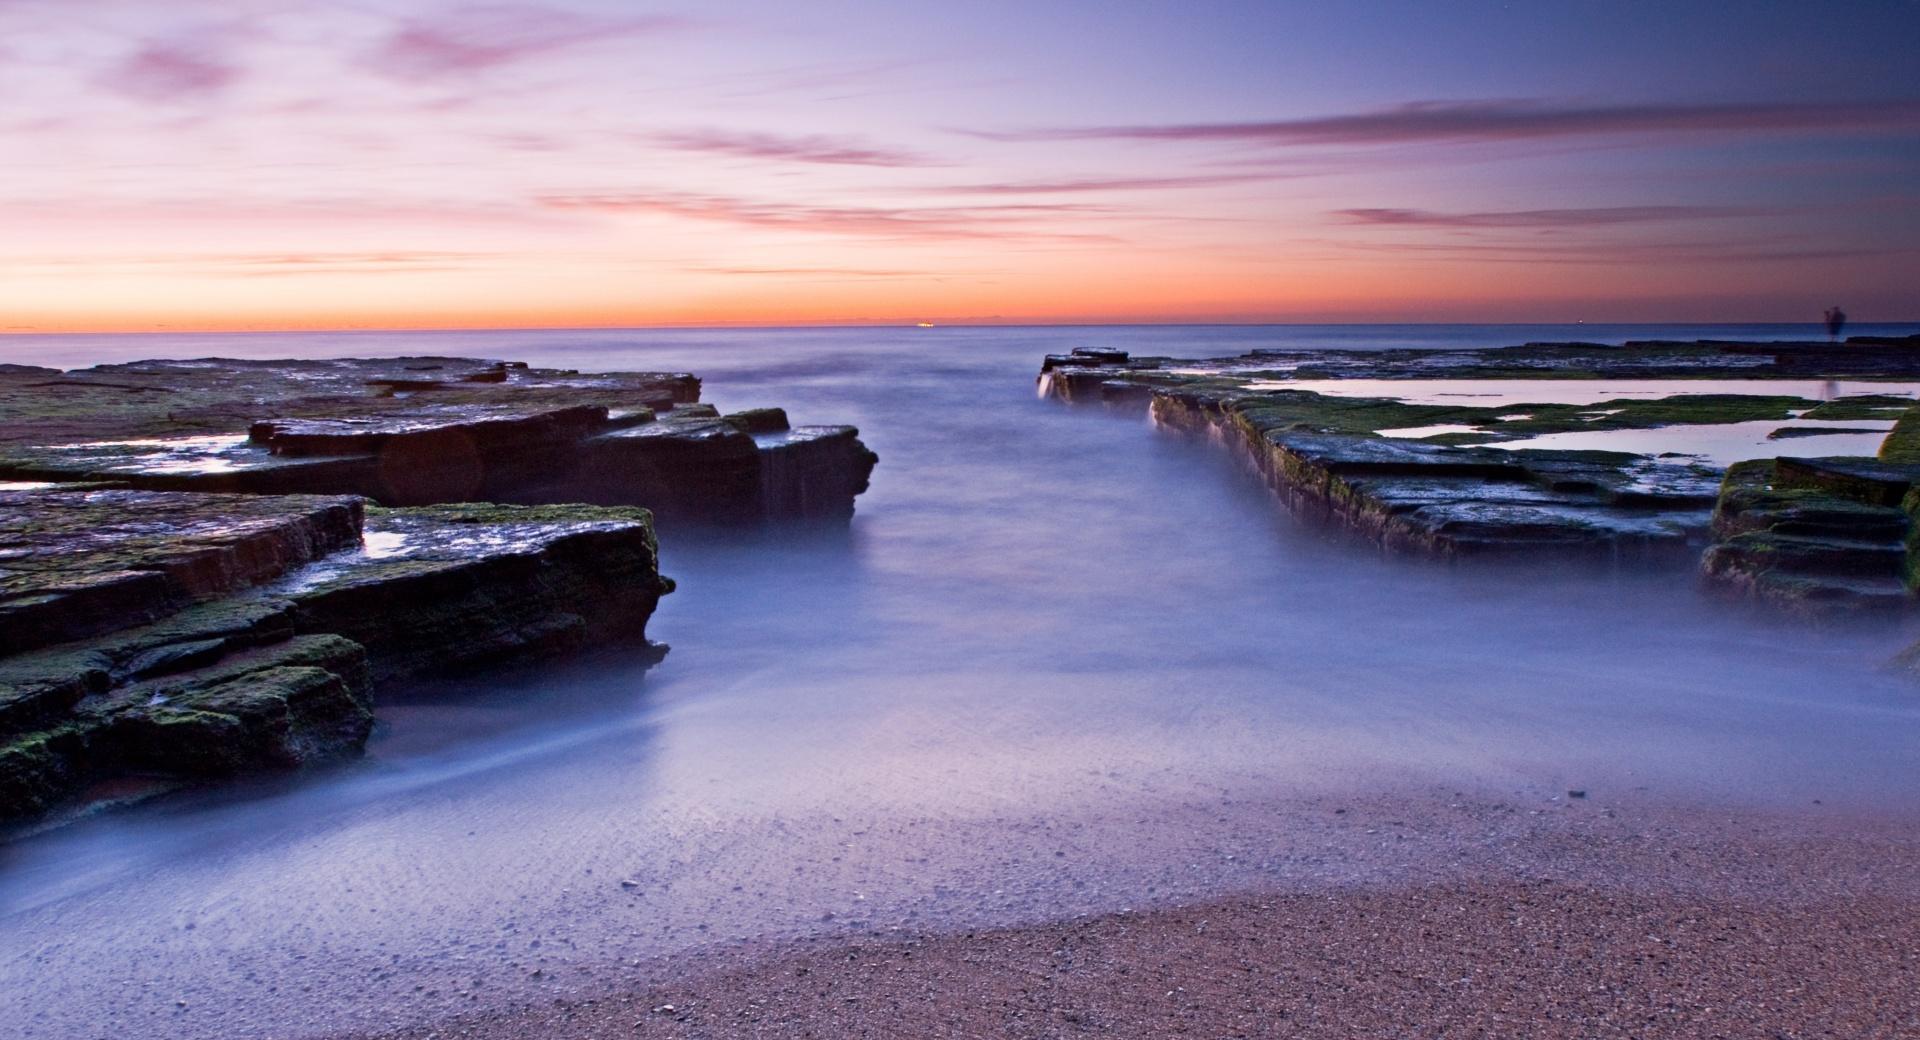 Beautiful Sea Horizon, Sunset at 1024 x 1024 iPad size wallpapers HD quality